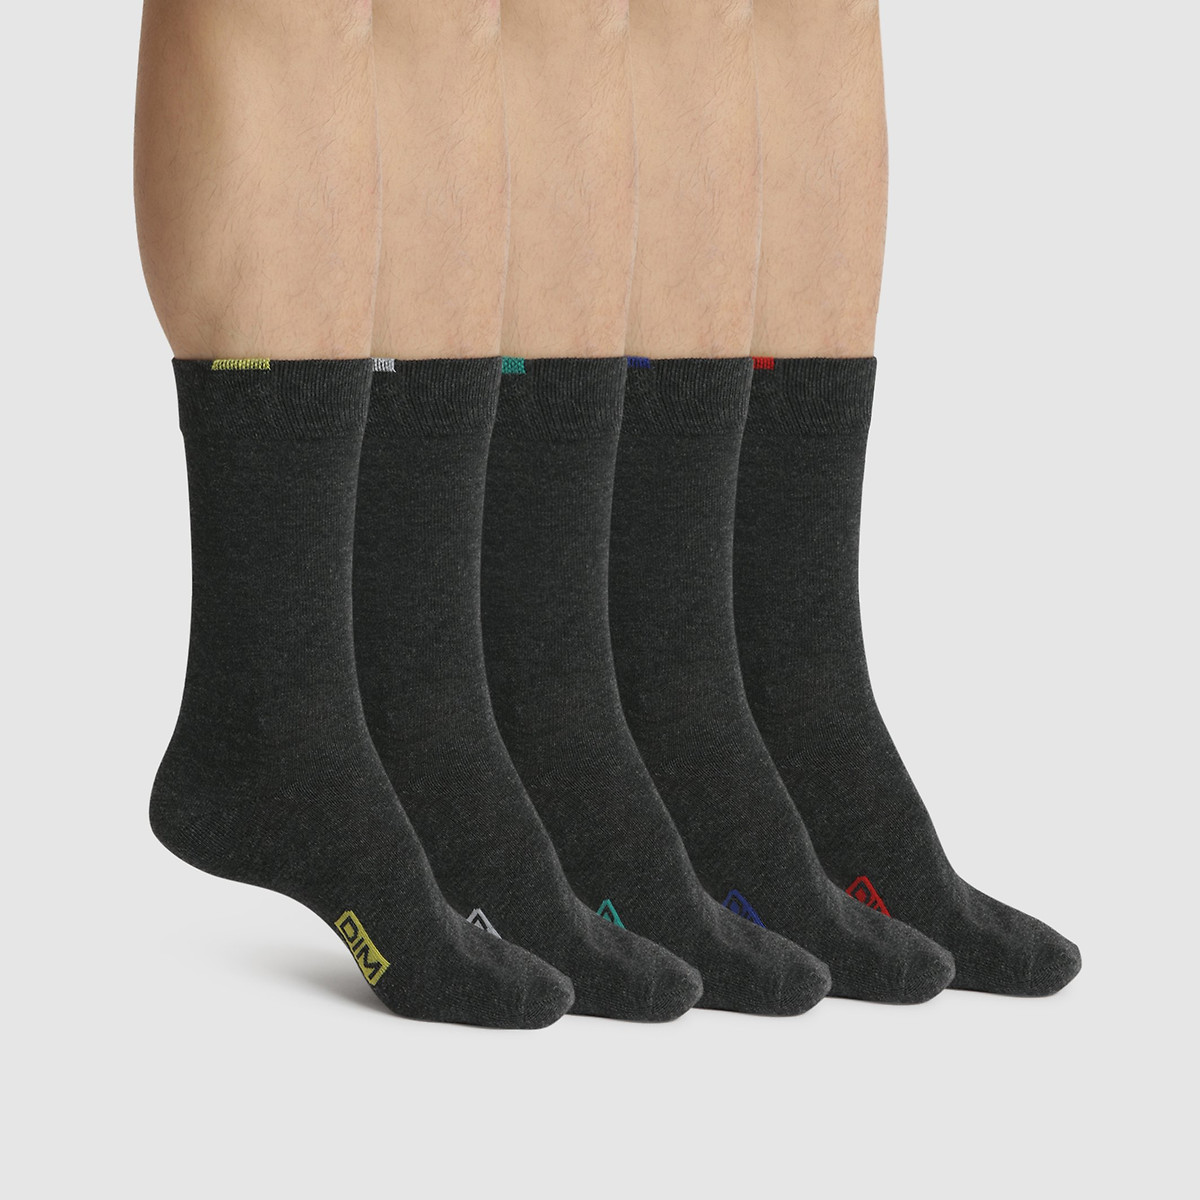 Blue Black EcoDim Sport Pack of 3 pairs of men's cotton socks